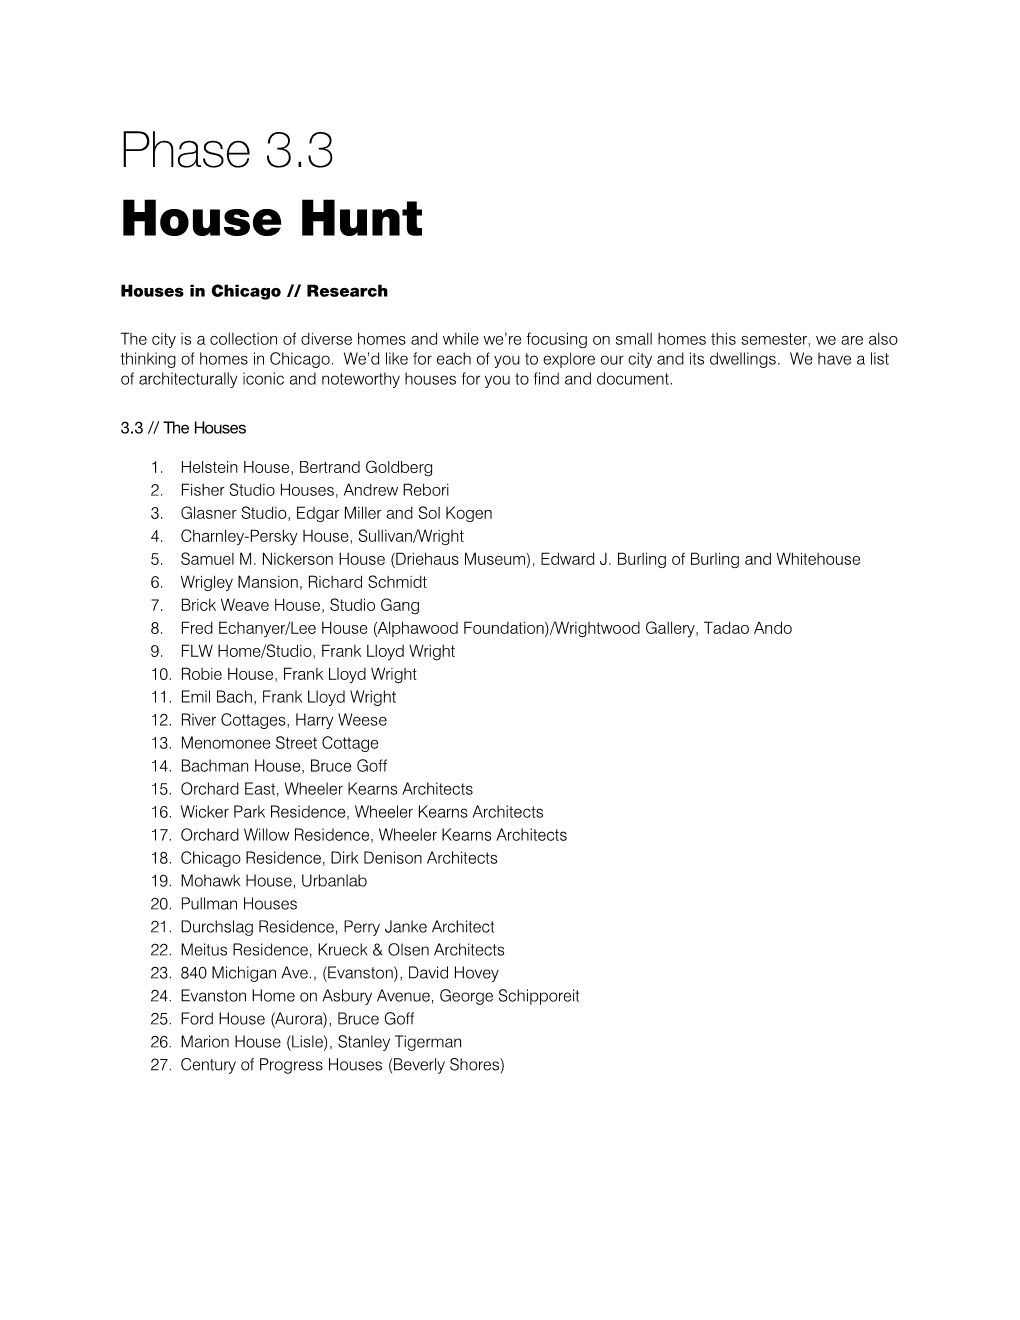 Phase 3.3 House Hunt